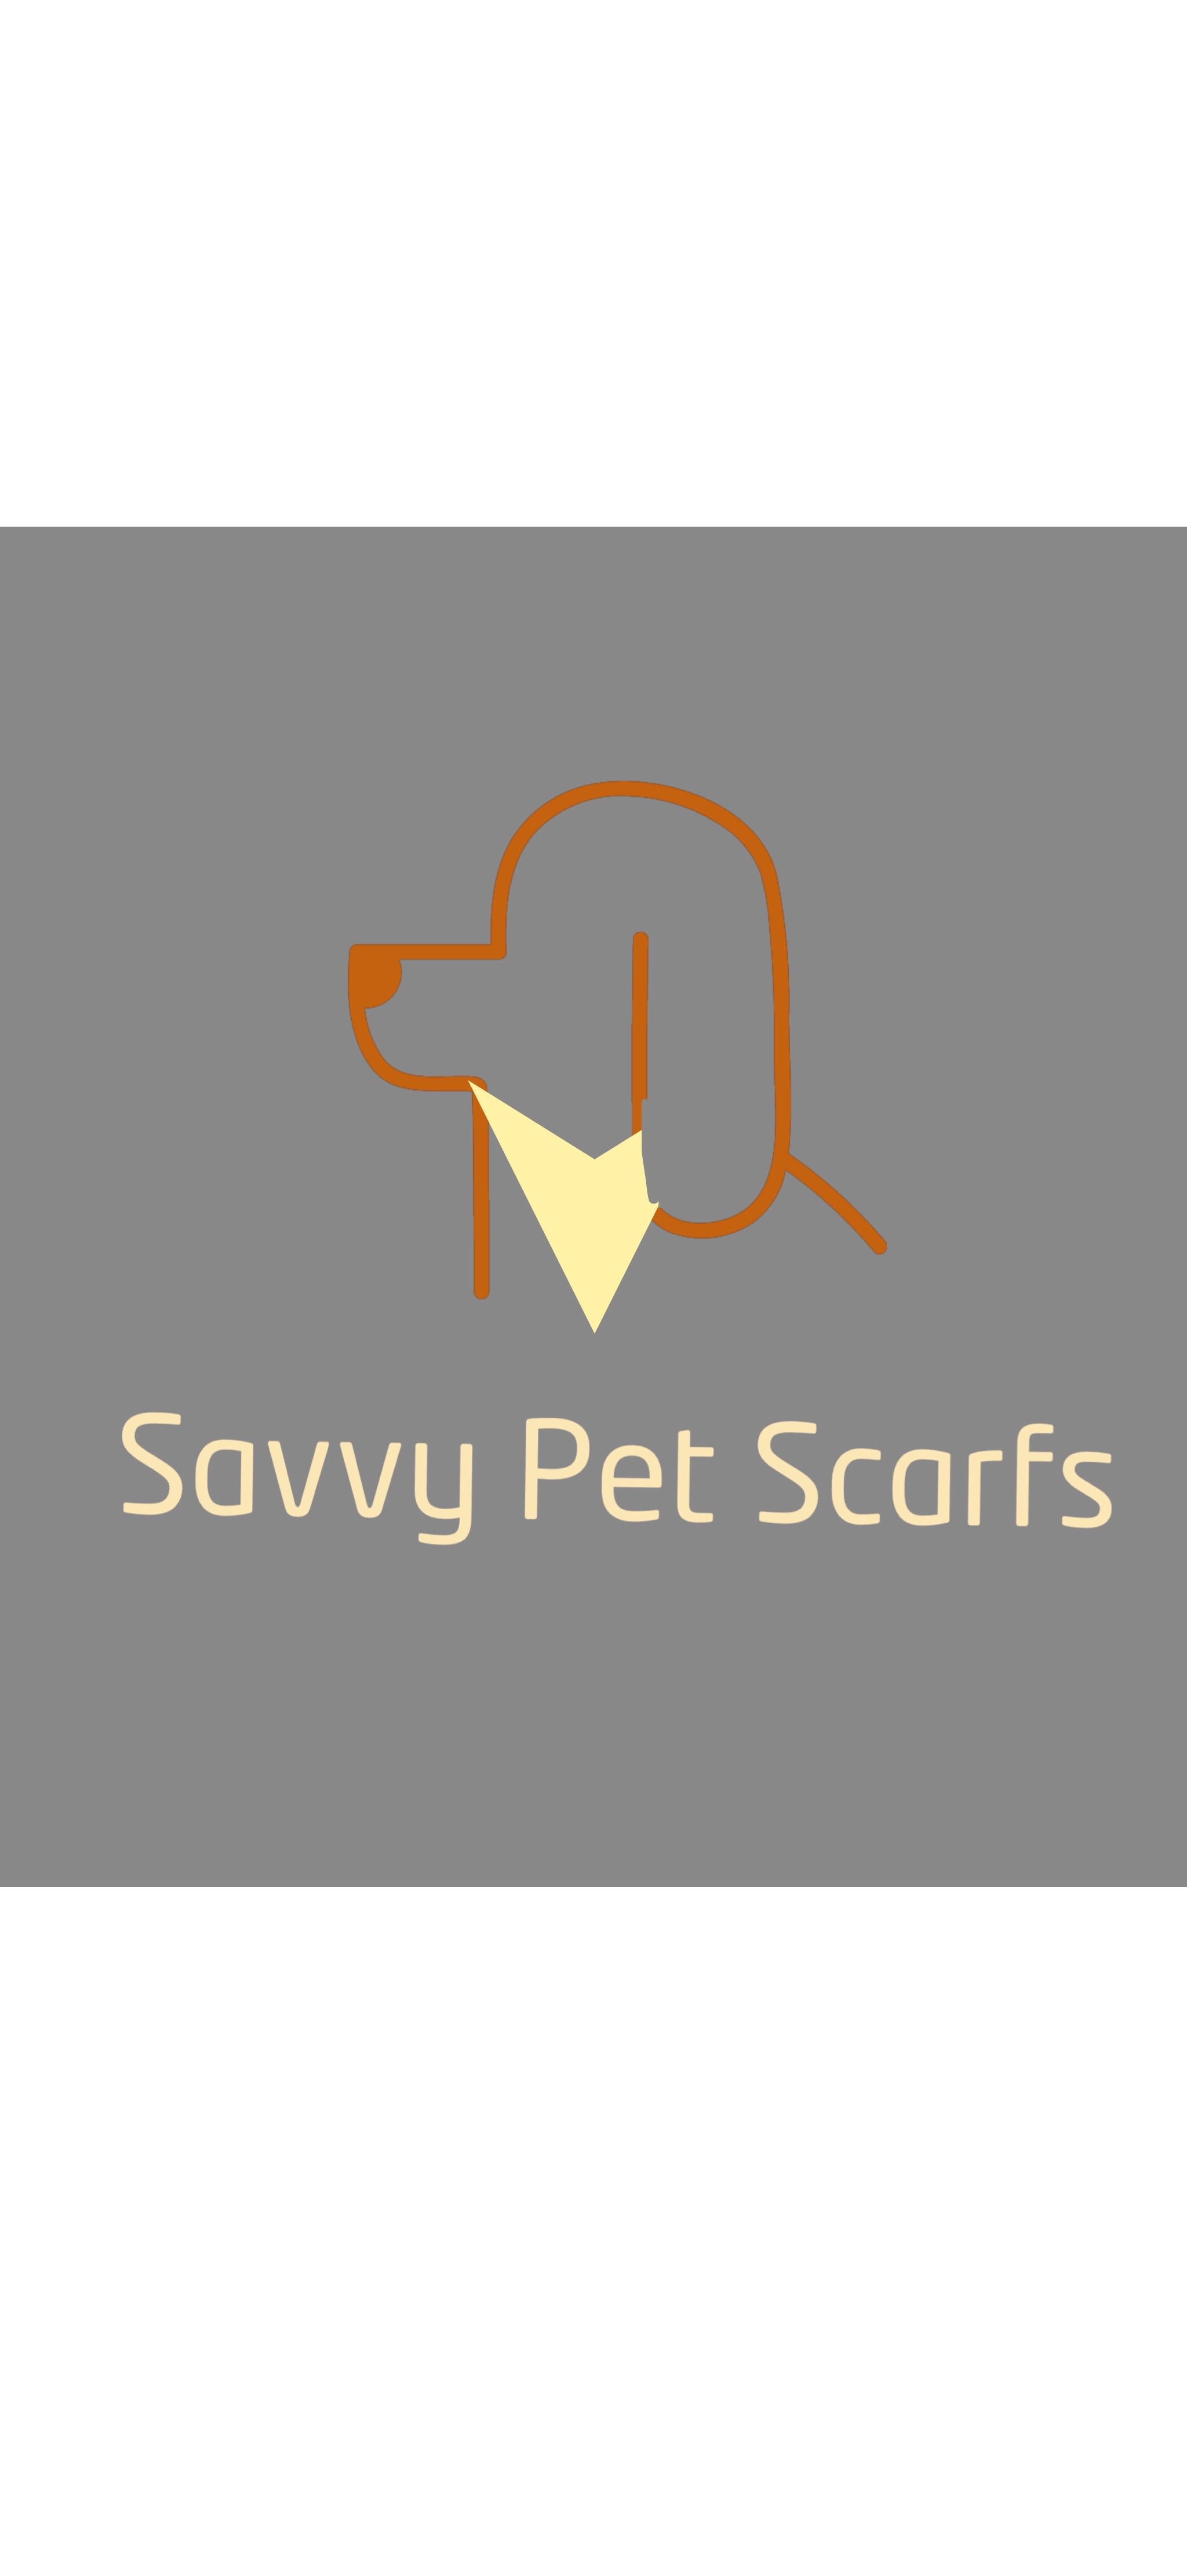 Savvy Pet Scarfs